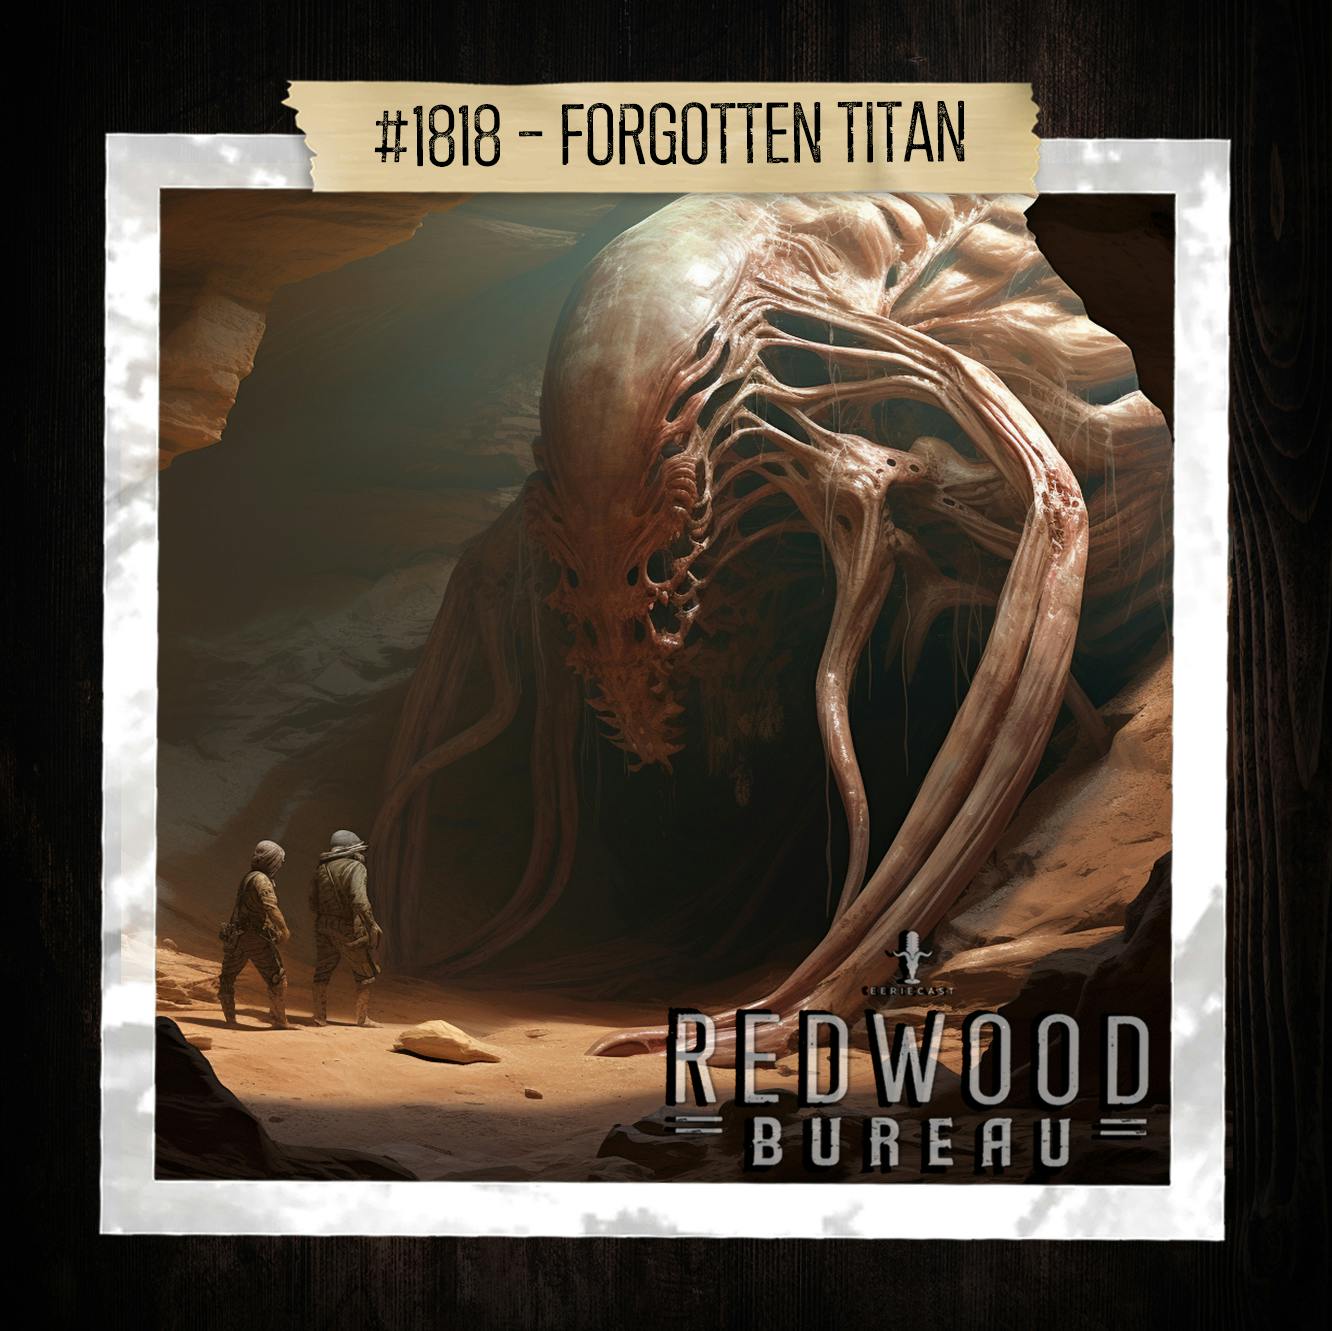 "FORGOTTEN TITAN" - Redwood Bureau Phenomenon #1818